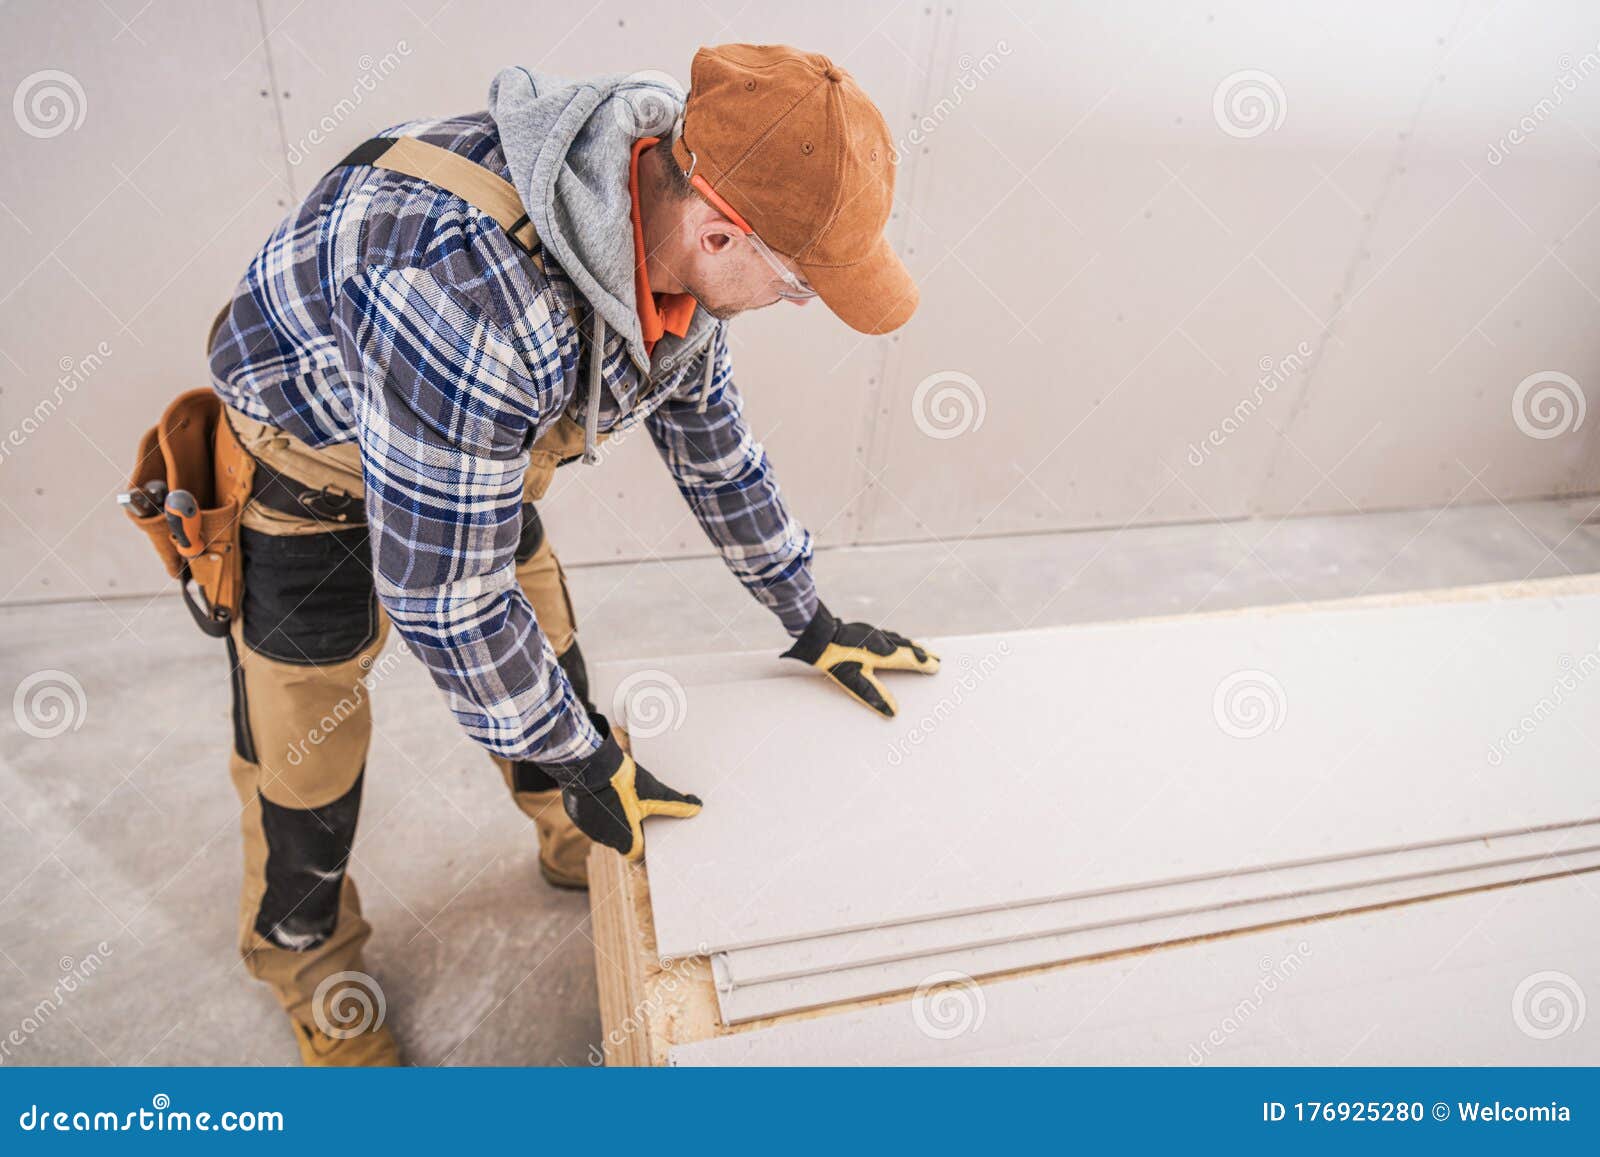 preparing building materials